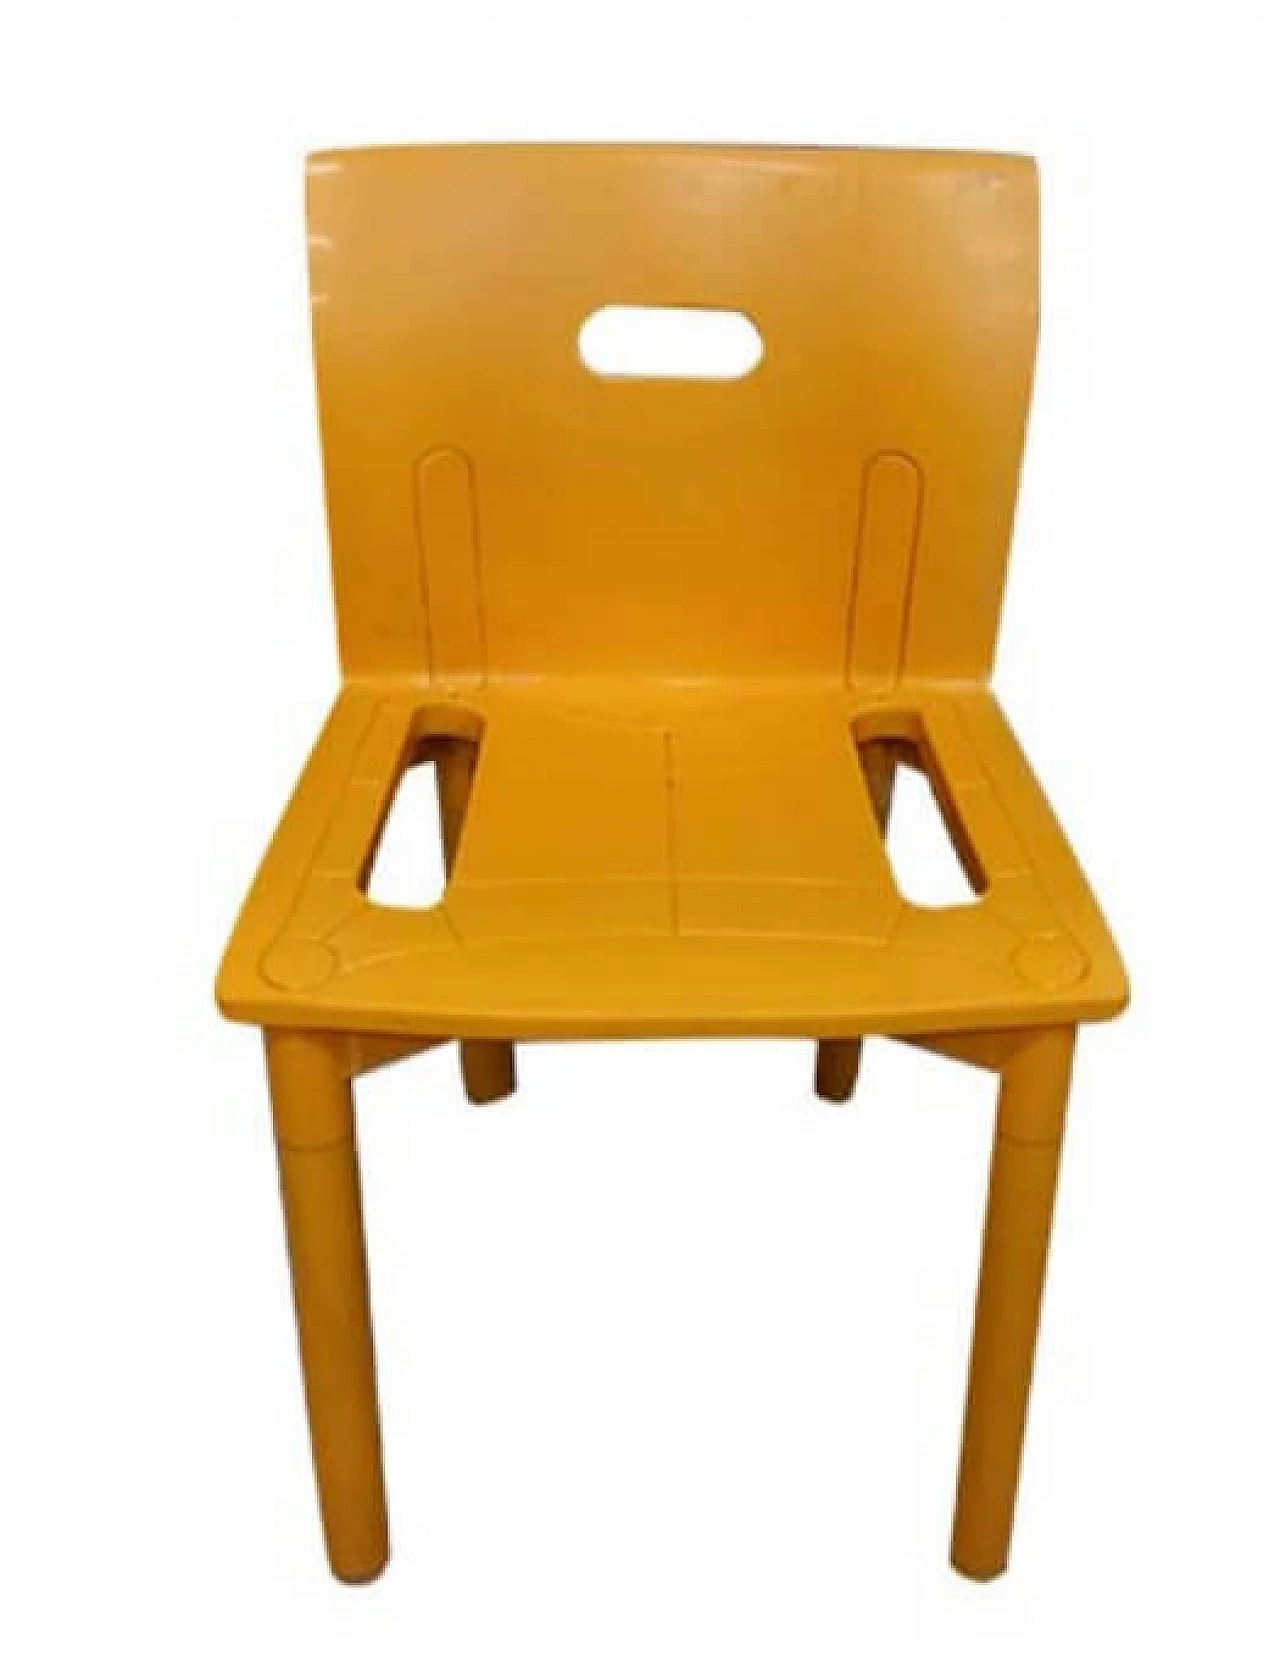 Chair 4870 by Anna Castelli Ferrieri for Kartell, 1980s 6